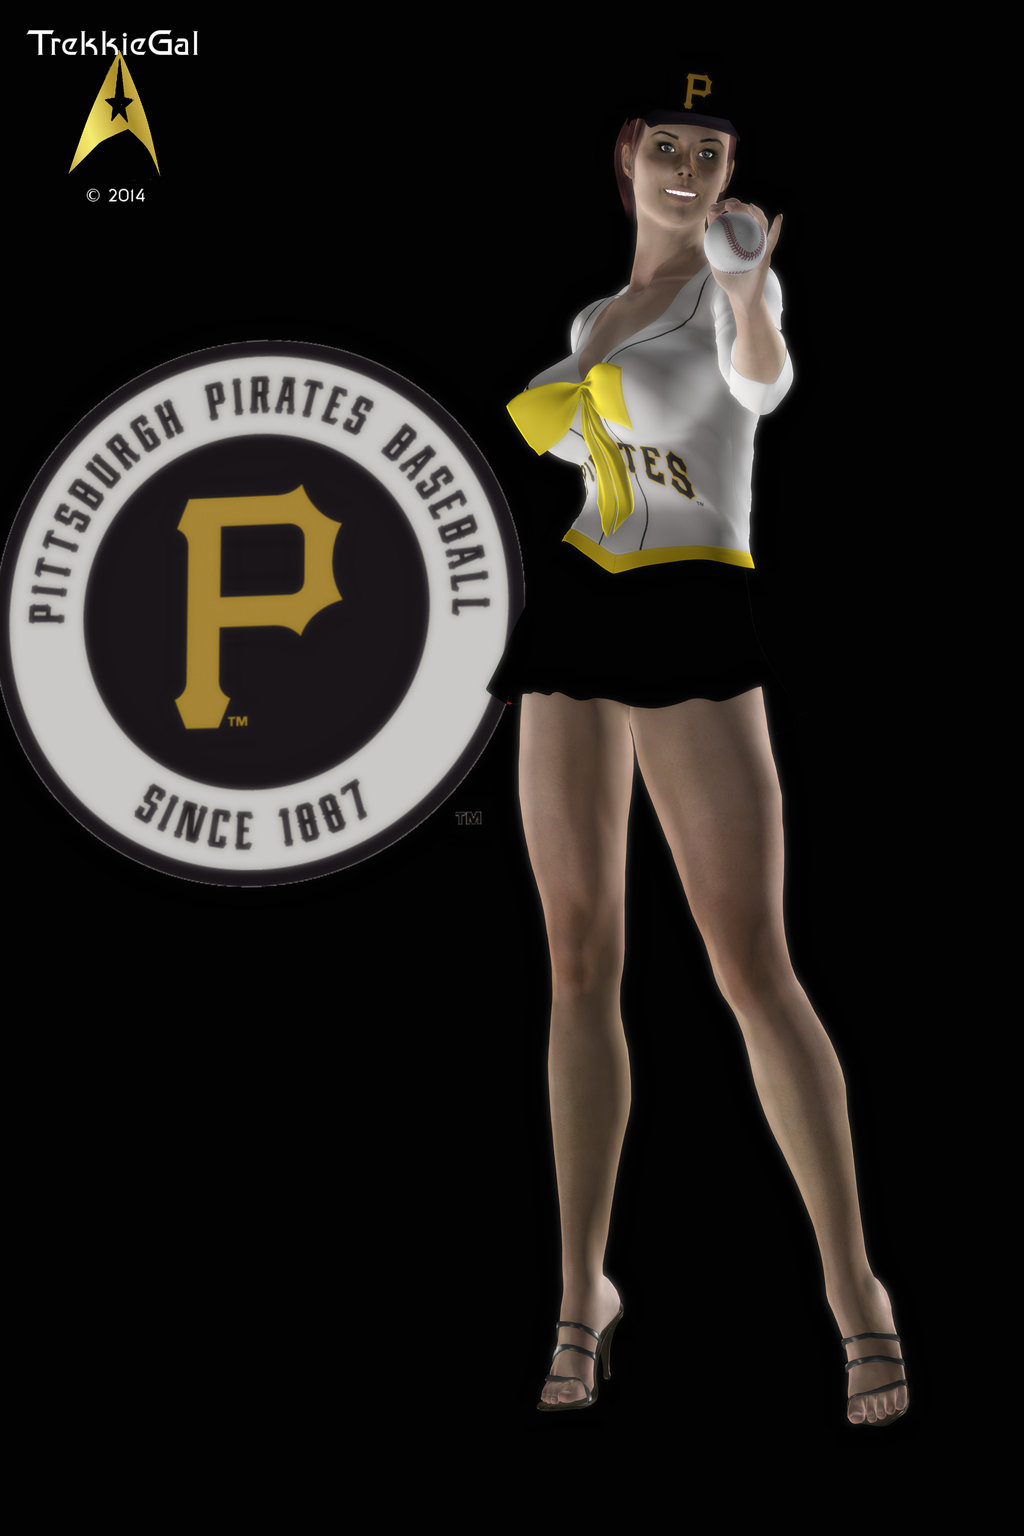 2014 Pittsburgh Pirates by TrekkieGal on